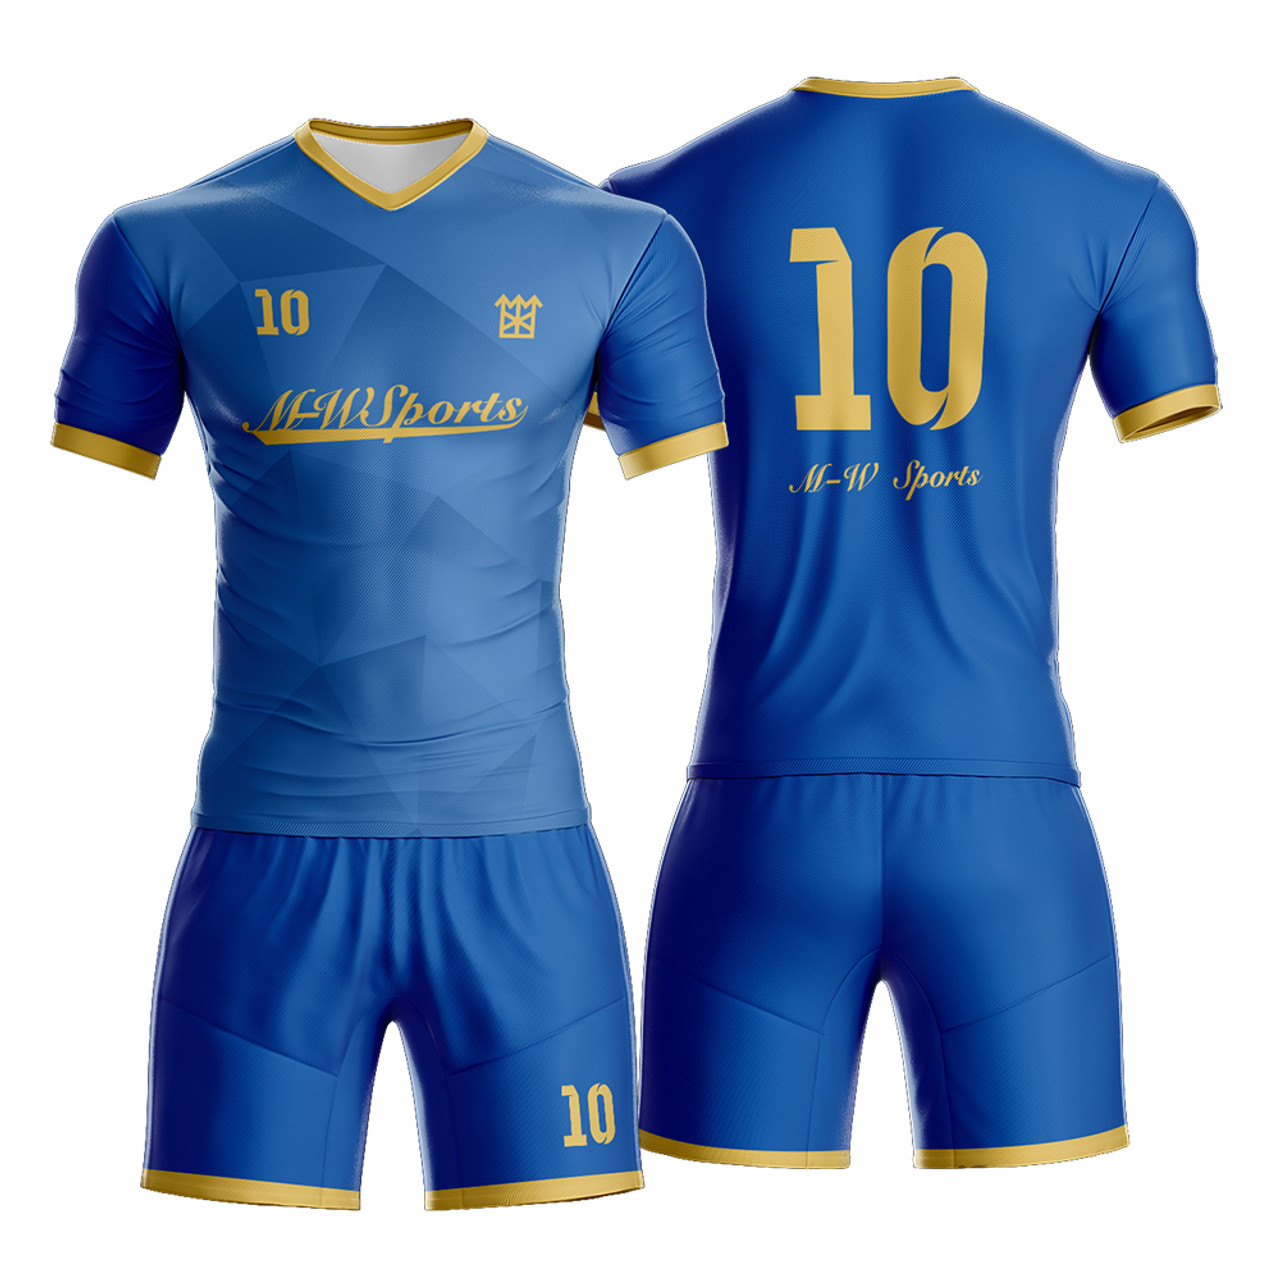 blue soccer jersey